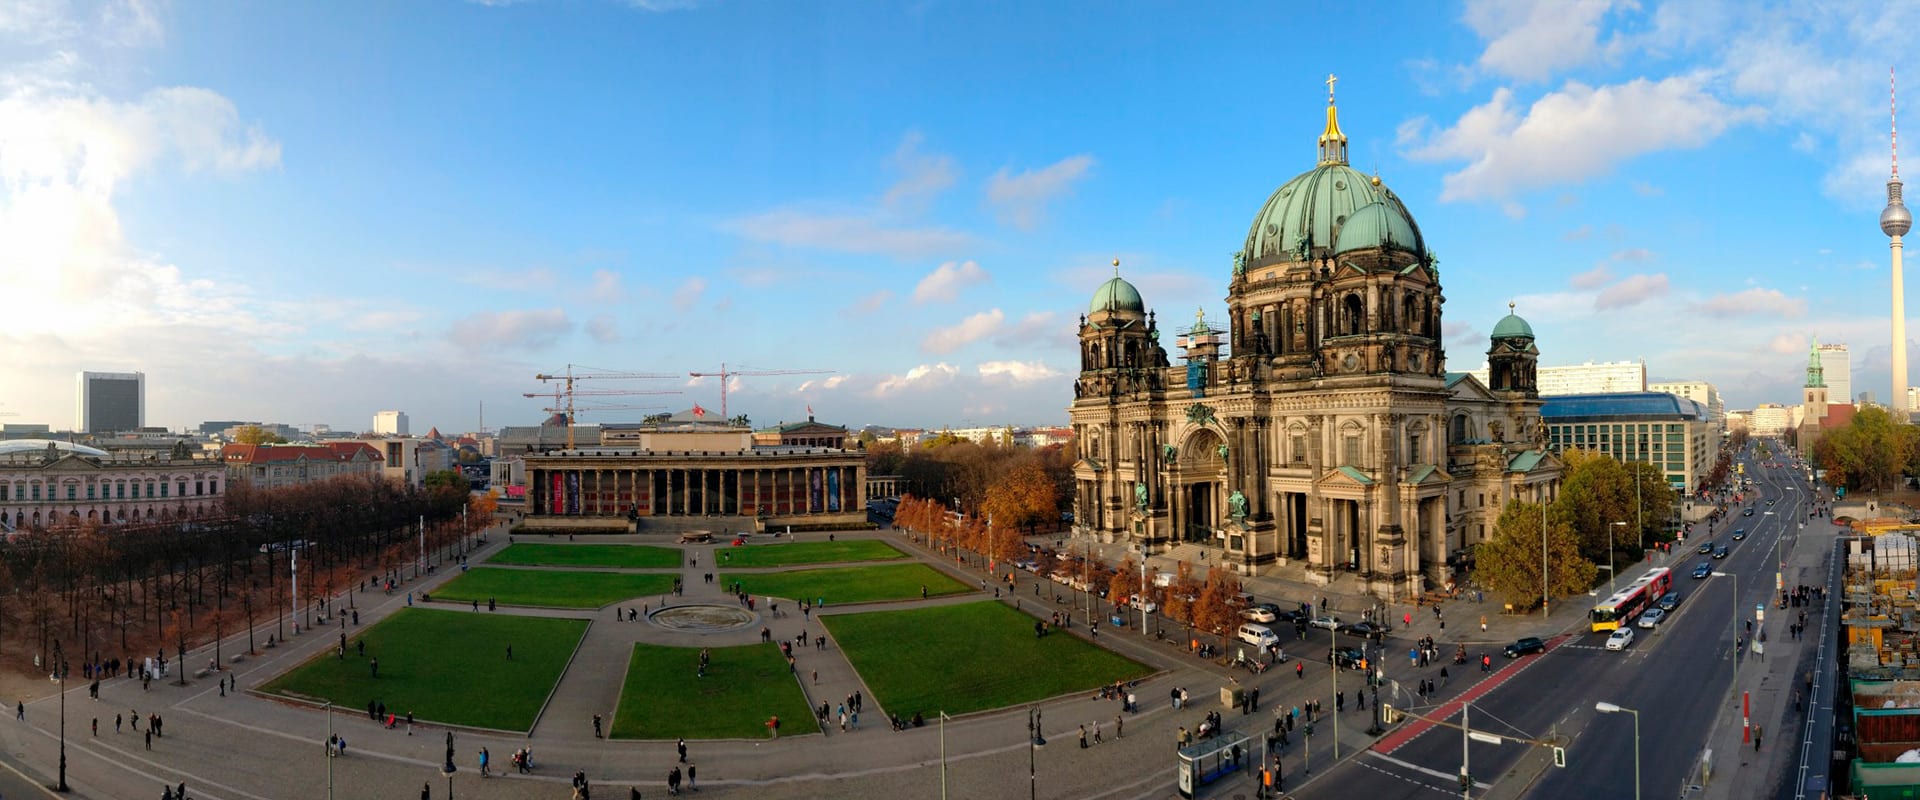 Museumsinsel - A famosa Ilha dos Museus de Berlim